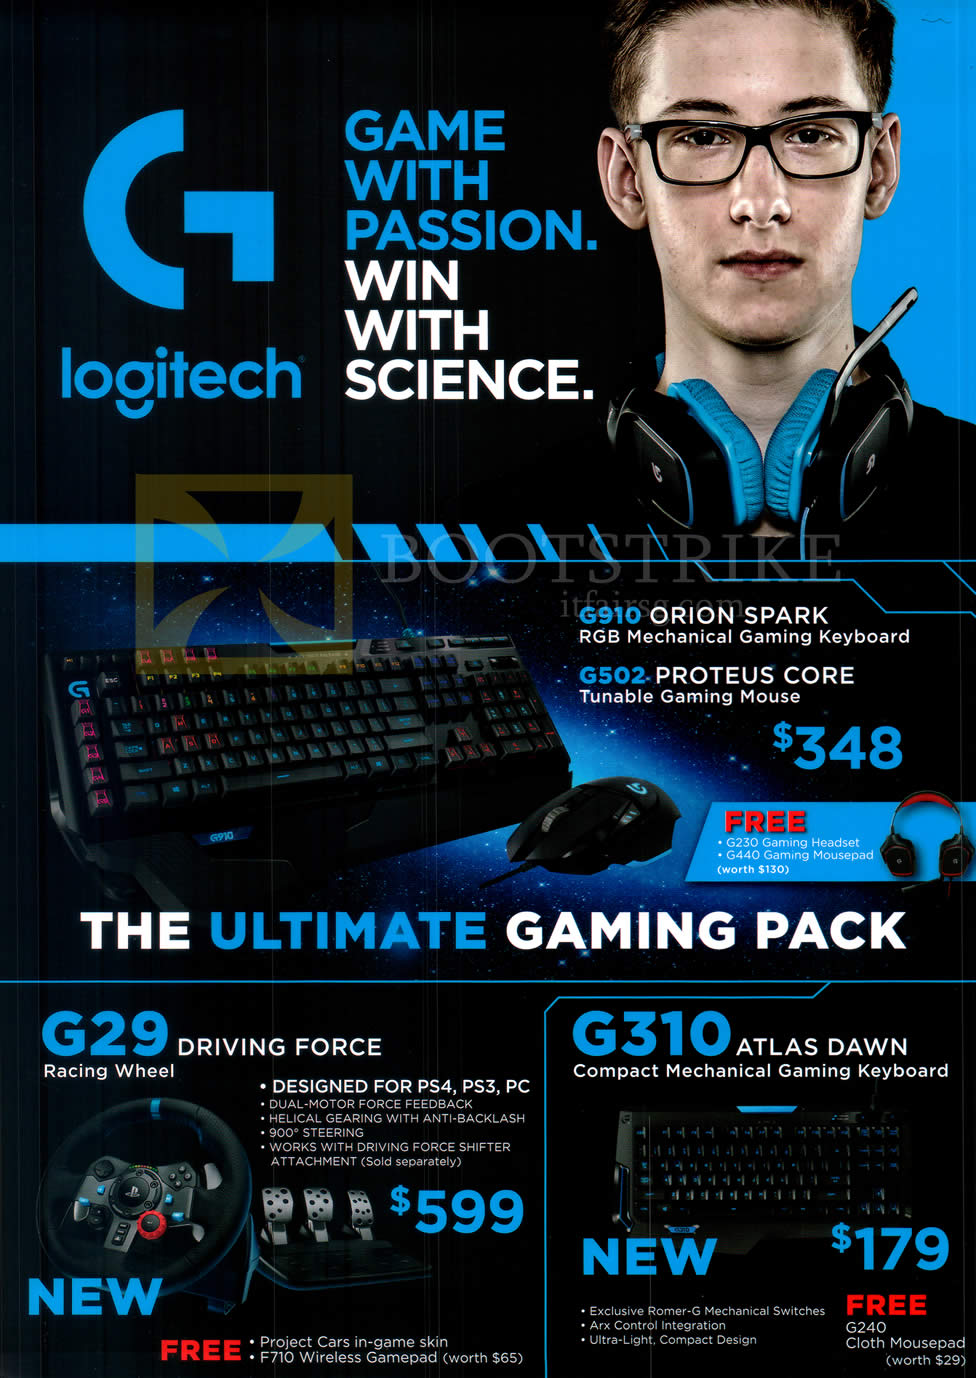 logitech gaming software for g29